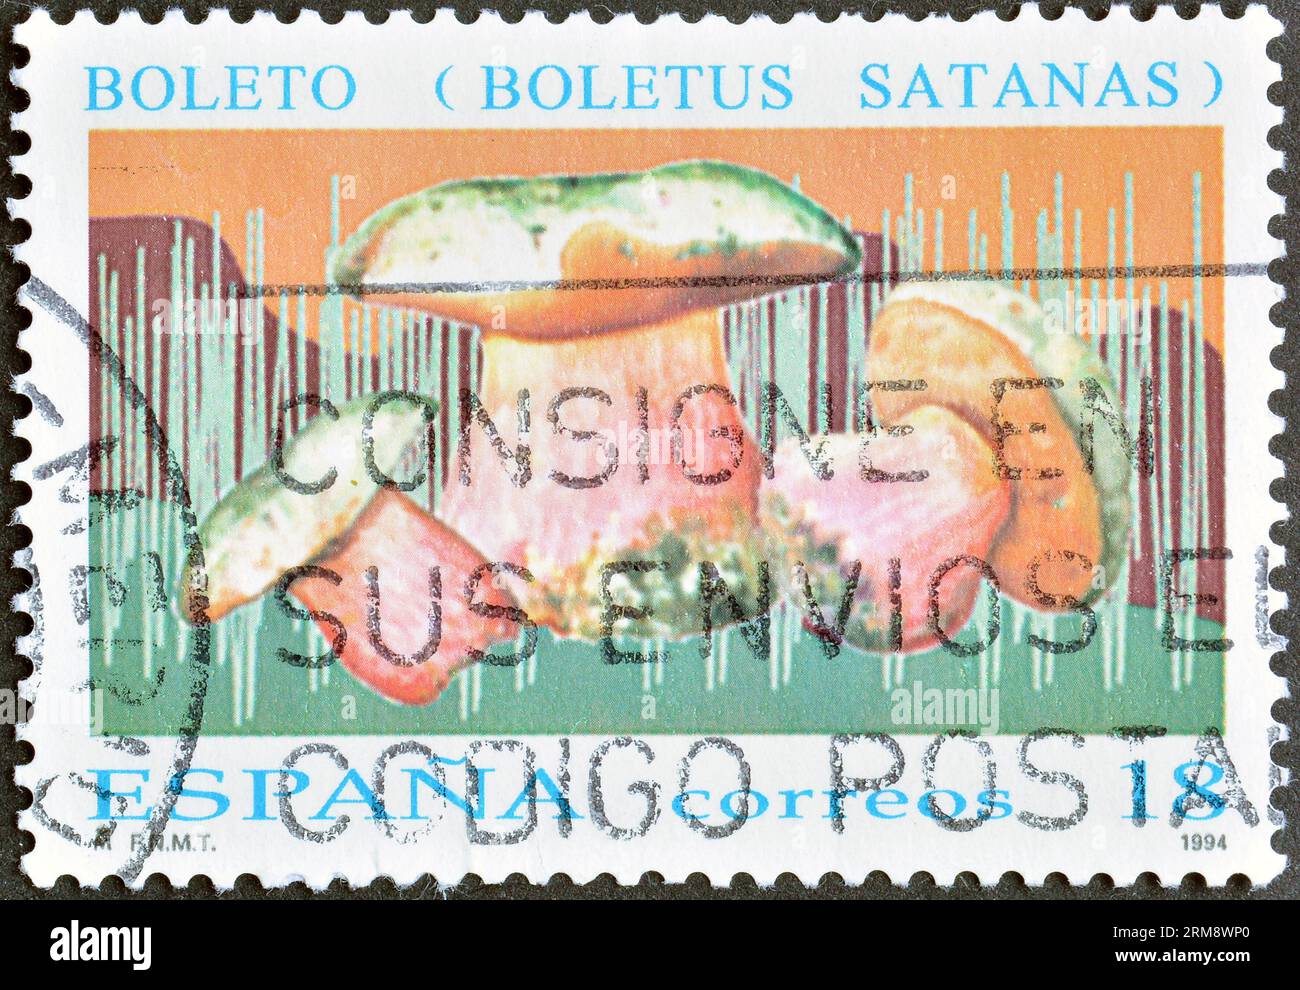 Cancelled postage stamp printed by Spain, that shows Satan's Mushroom (Boletus Satanas), circa 1994. Stock Photo